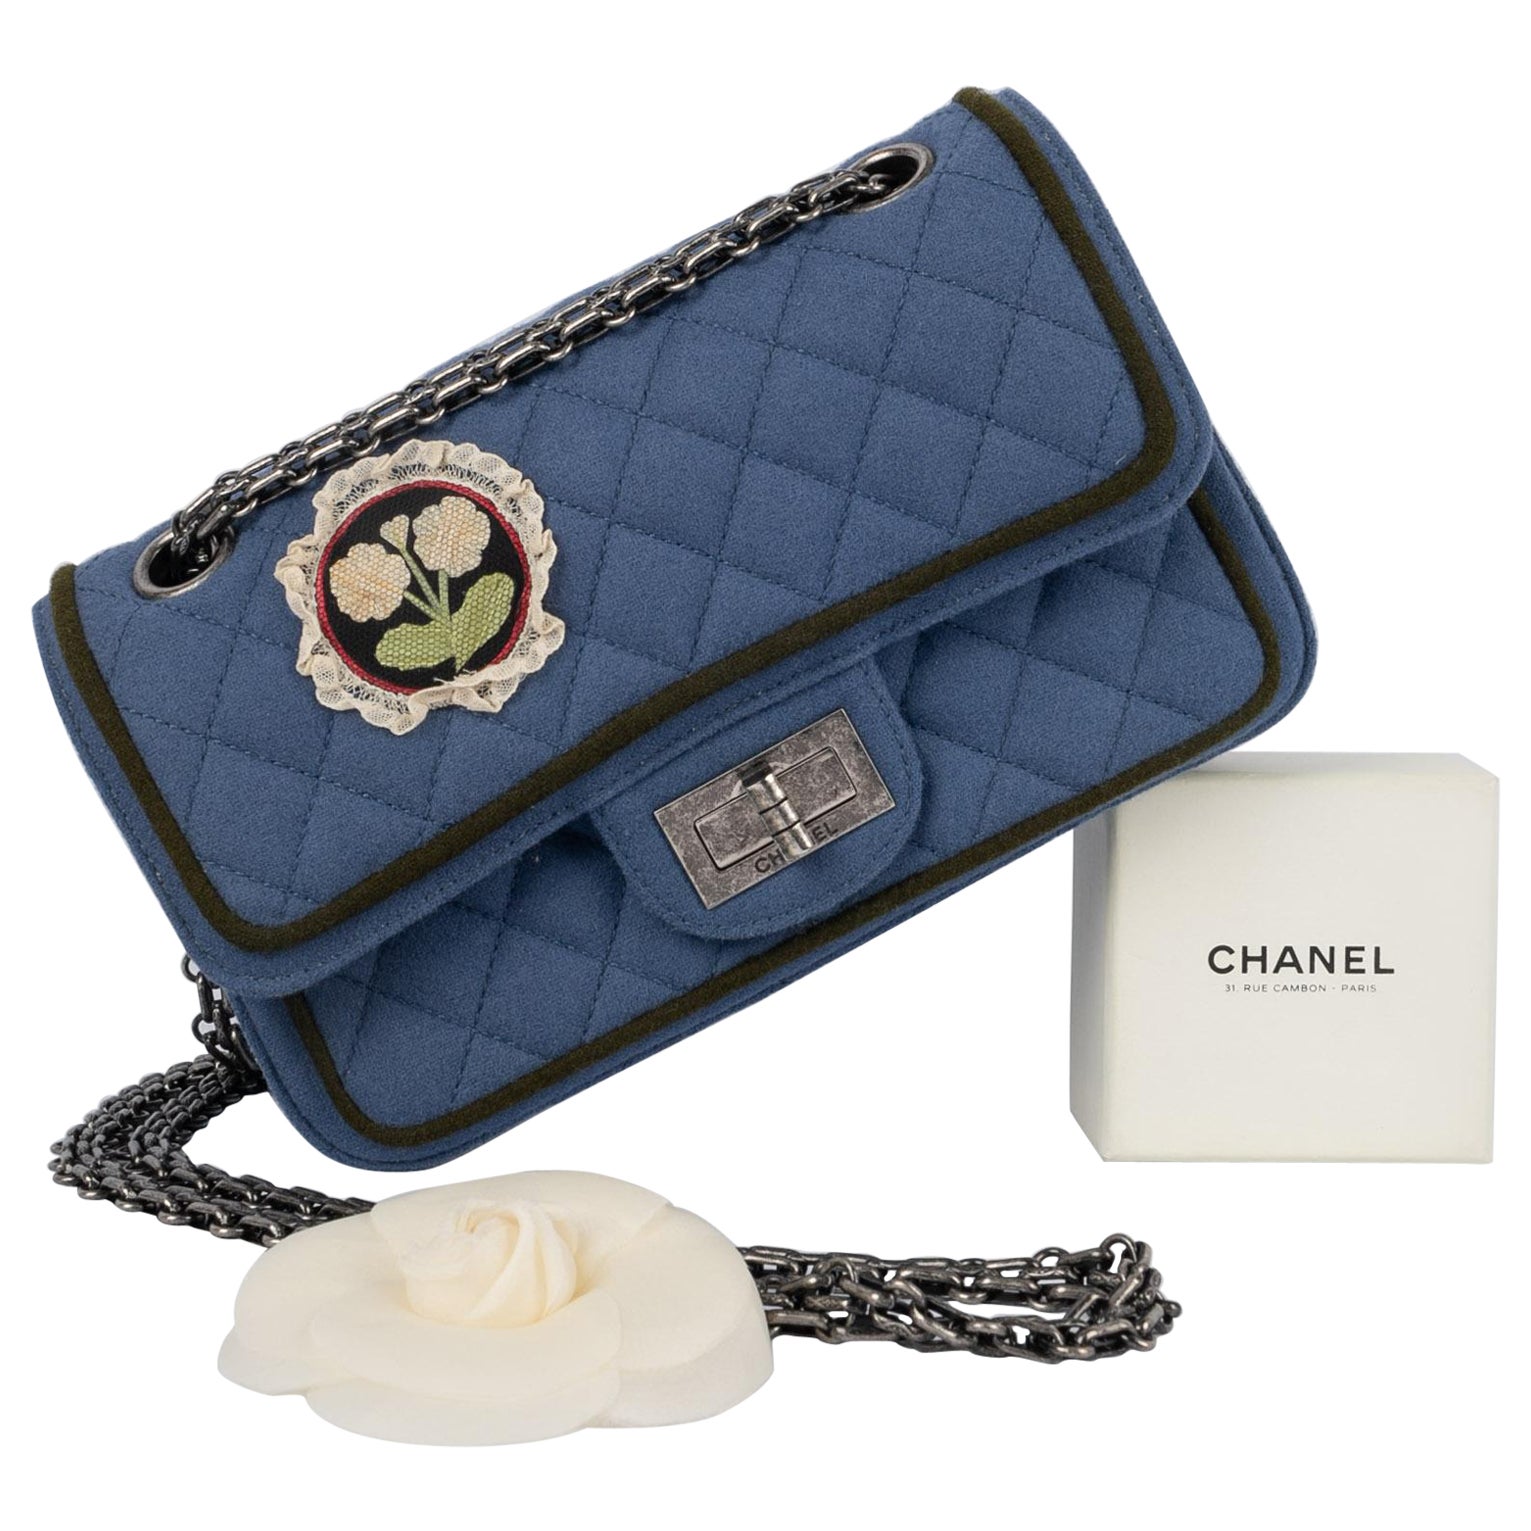 Chanel 2.55 bag 2015/2016 For Sale